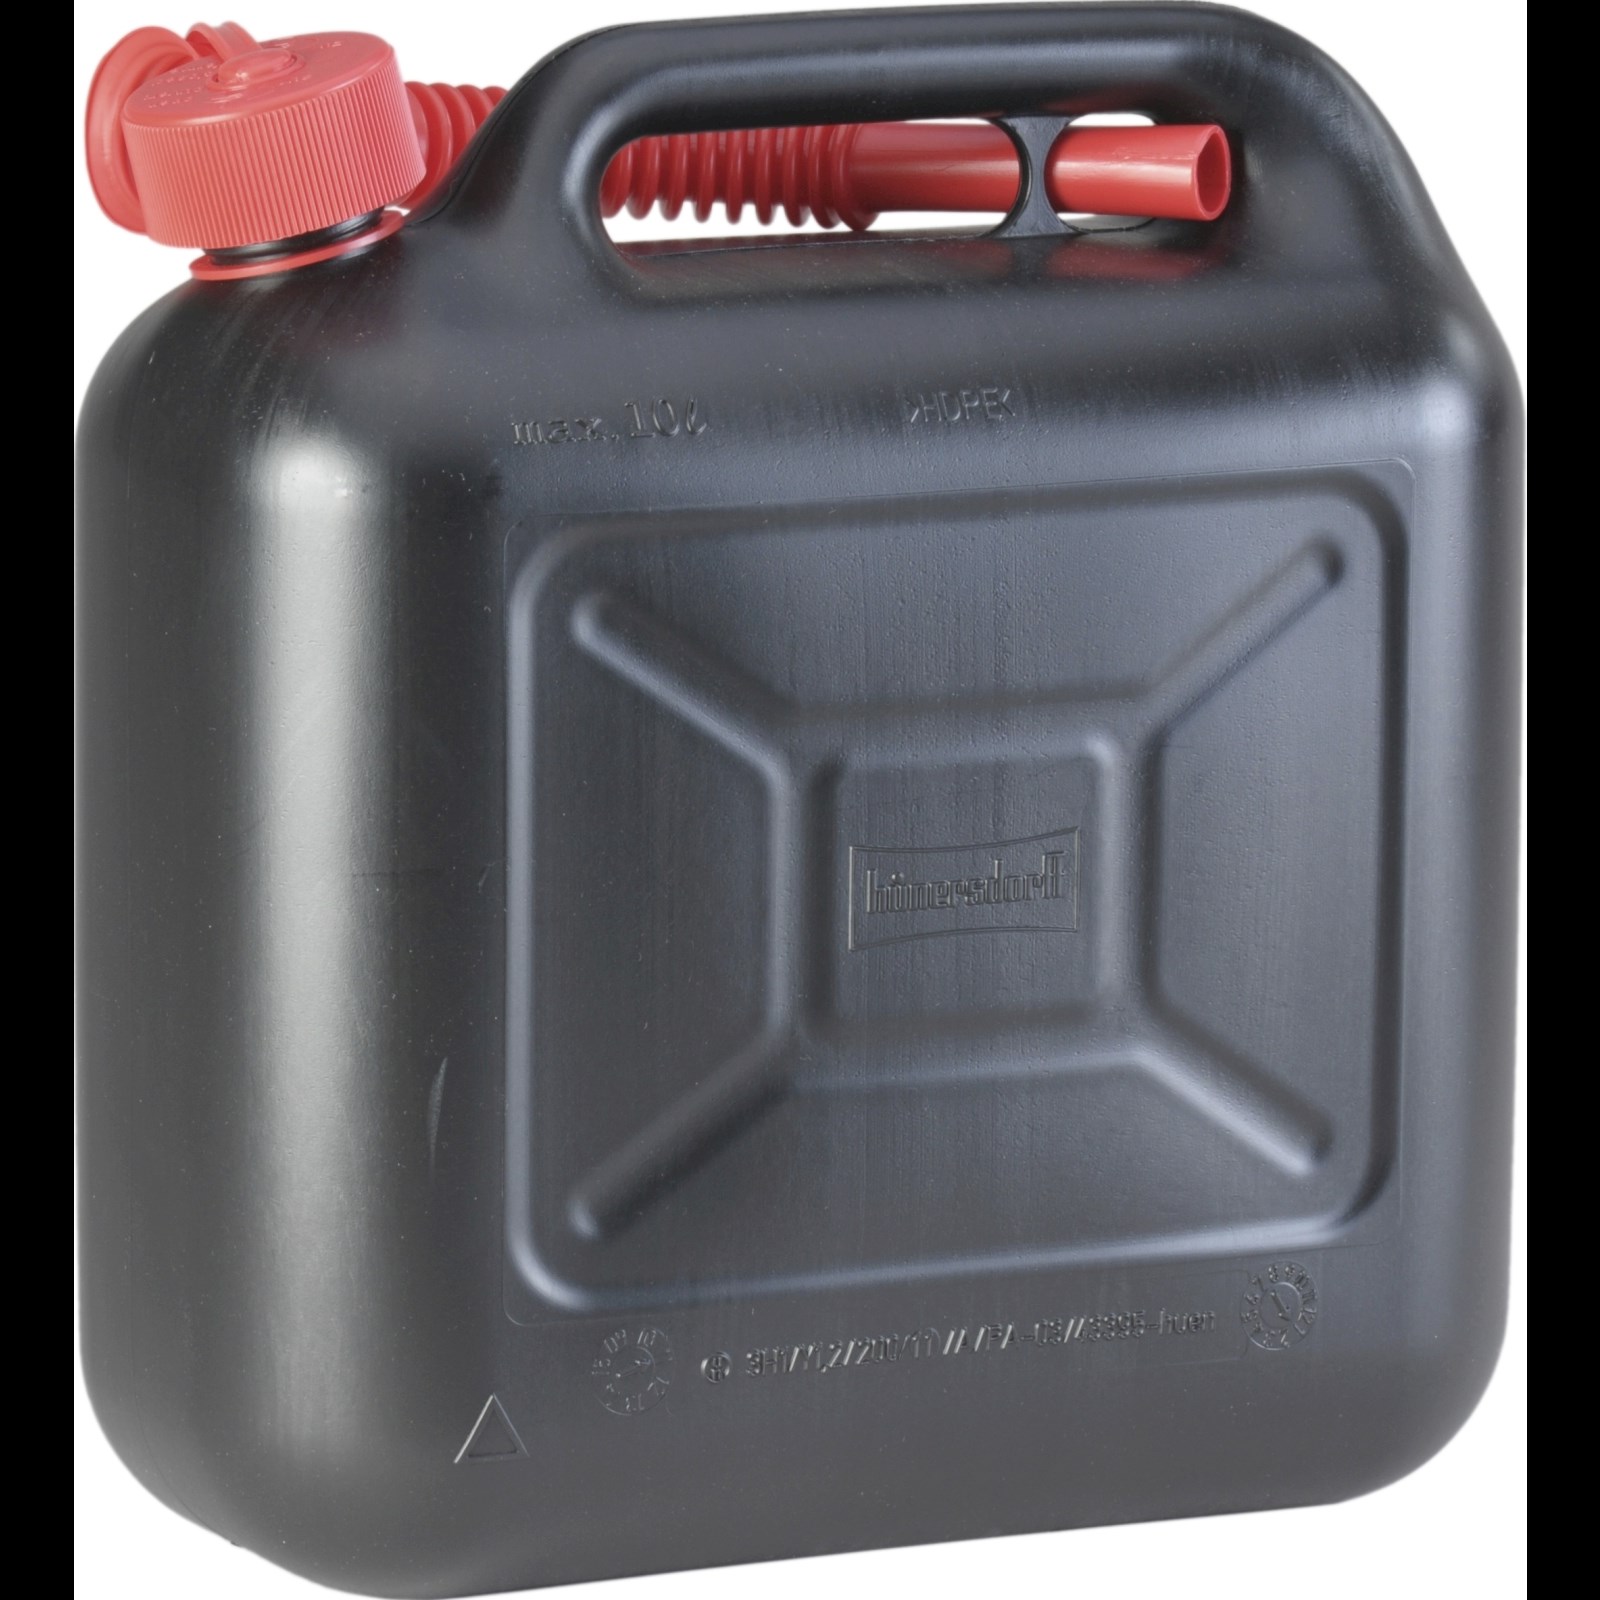 Benzinkanister 10L Kunststoff rot UN-geprüft (niedriges Modell), CHF 29.30